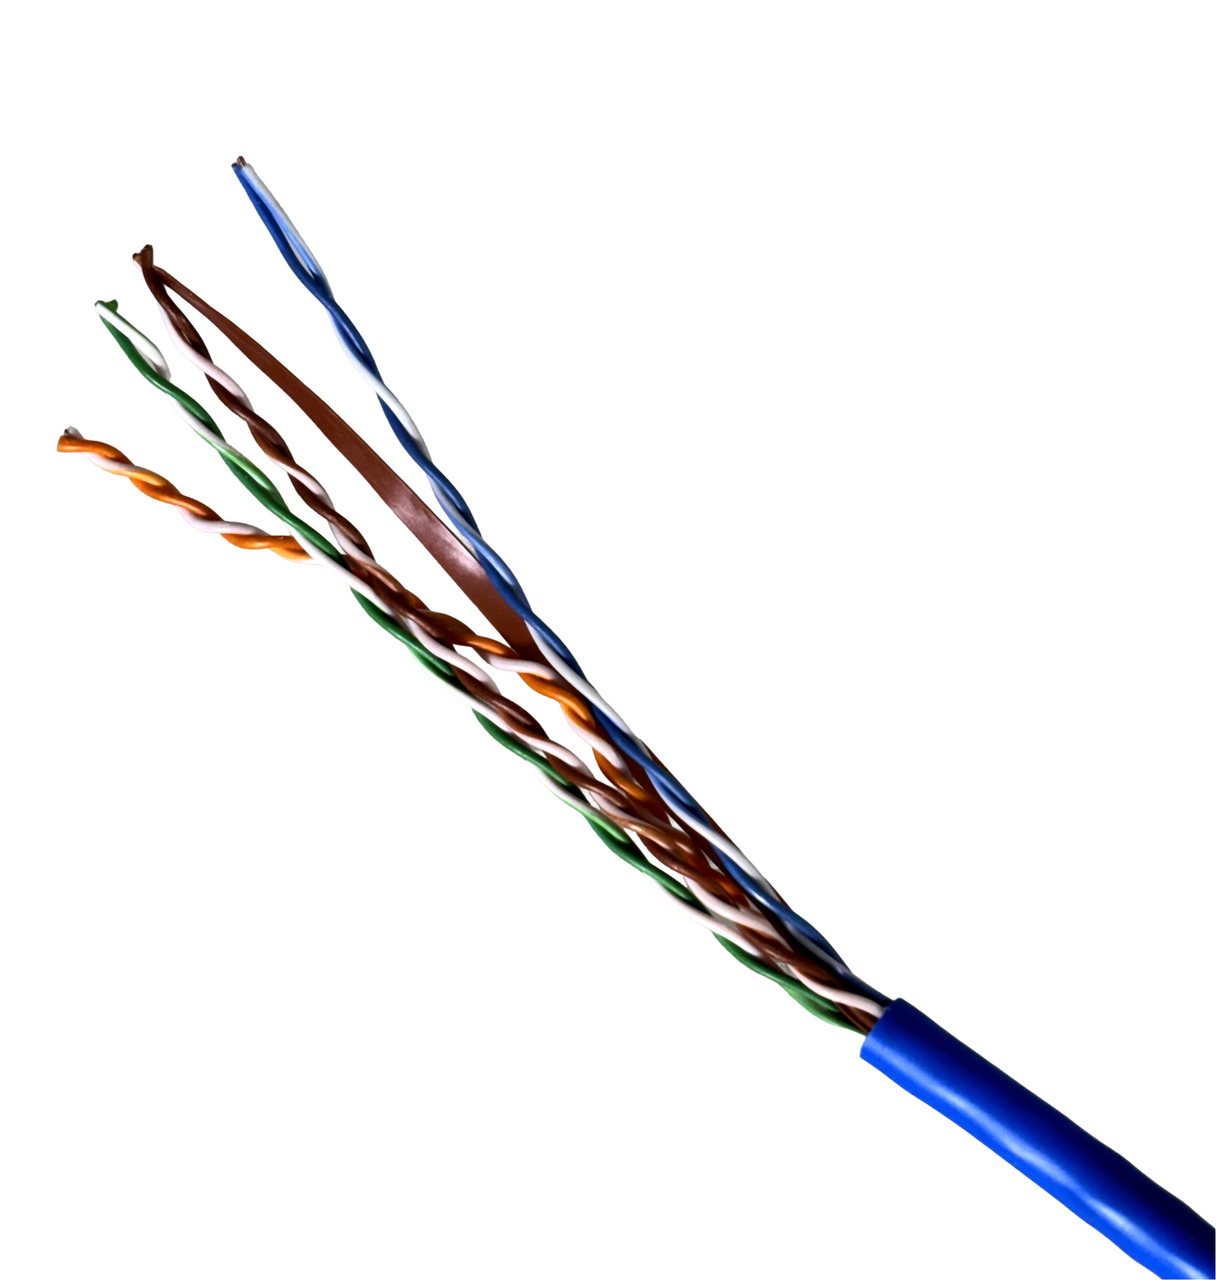 comCables BC-C6EPVC-BL Cable Cat 6E Enhanced 4 Pair 23 AWG 550 MHZ Blue